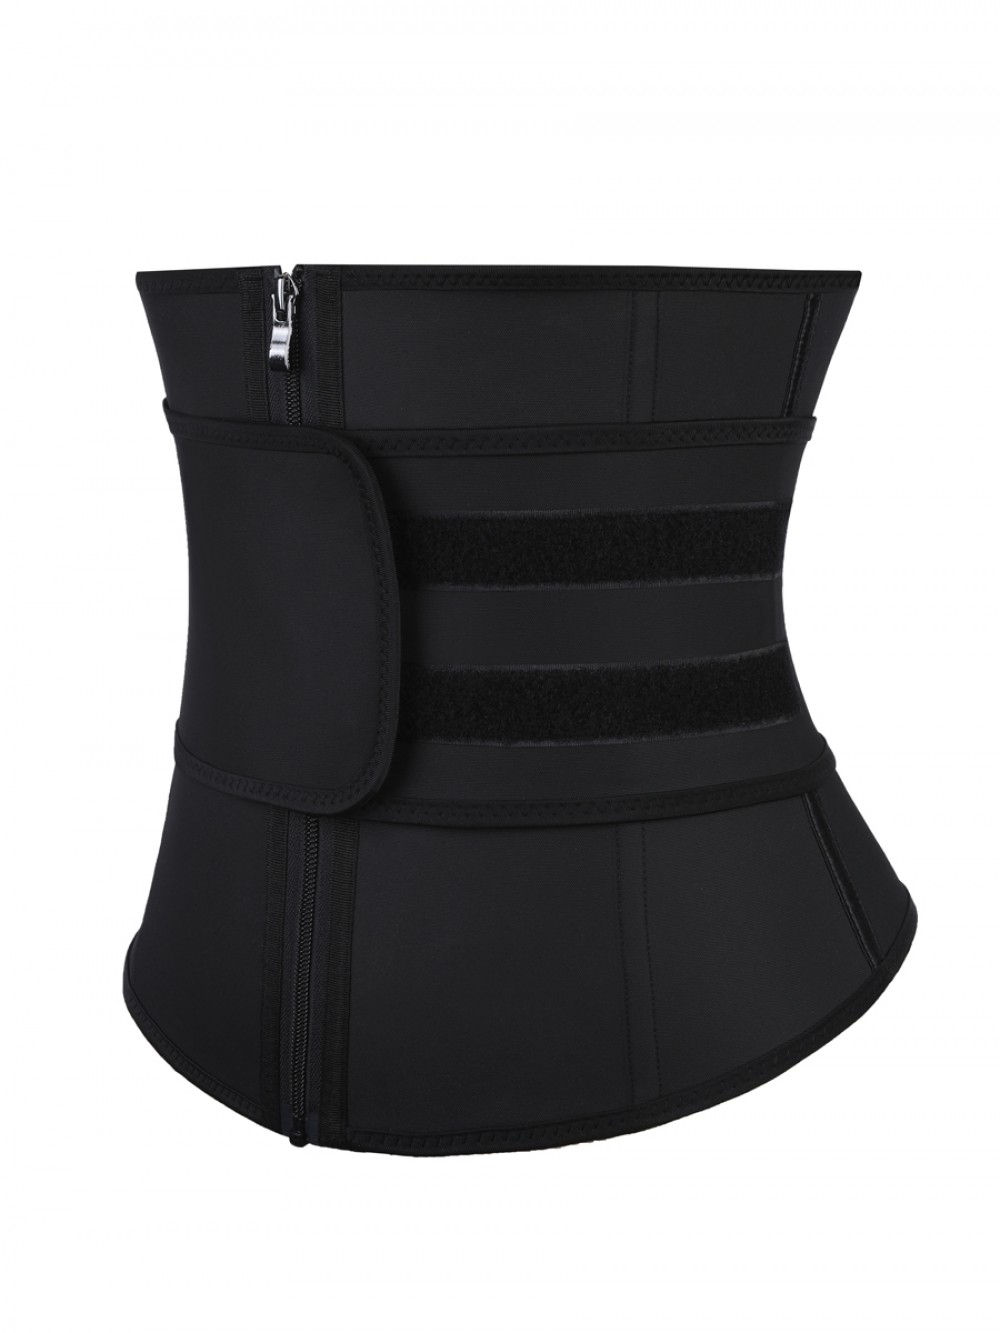 Black Zipper Plus Size Latex Waist Cincher Belt High Compression